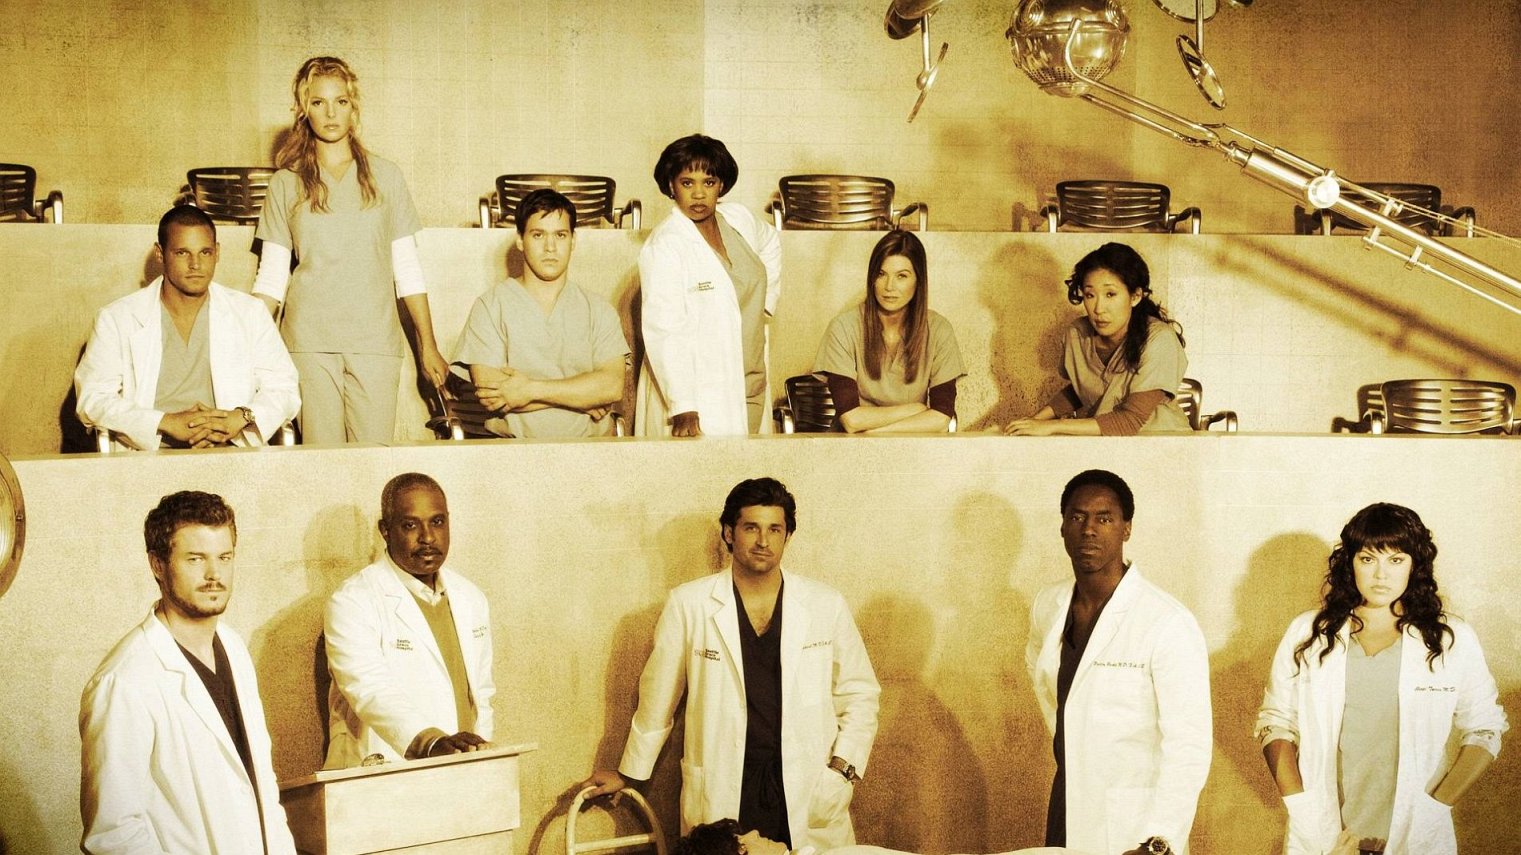 cast of Grey's Anatomy season 13